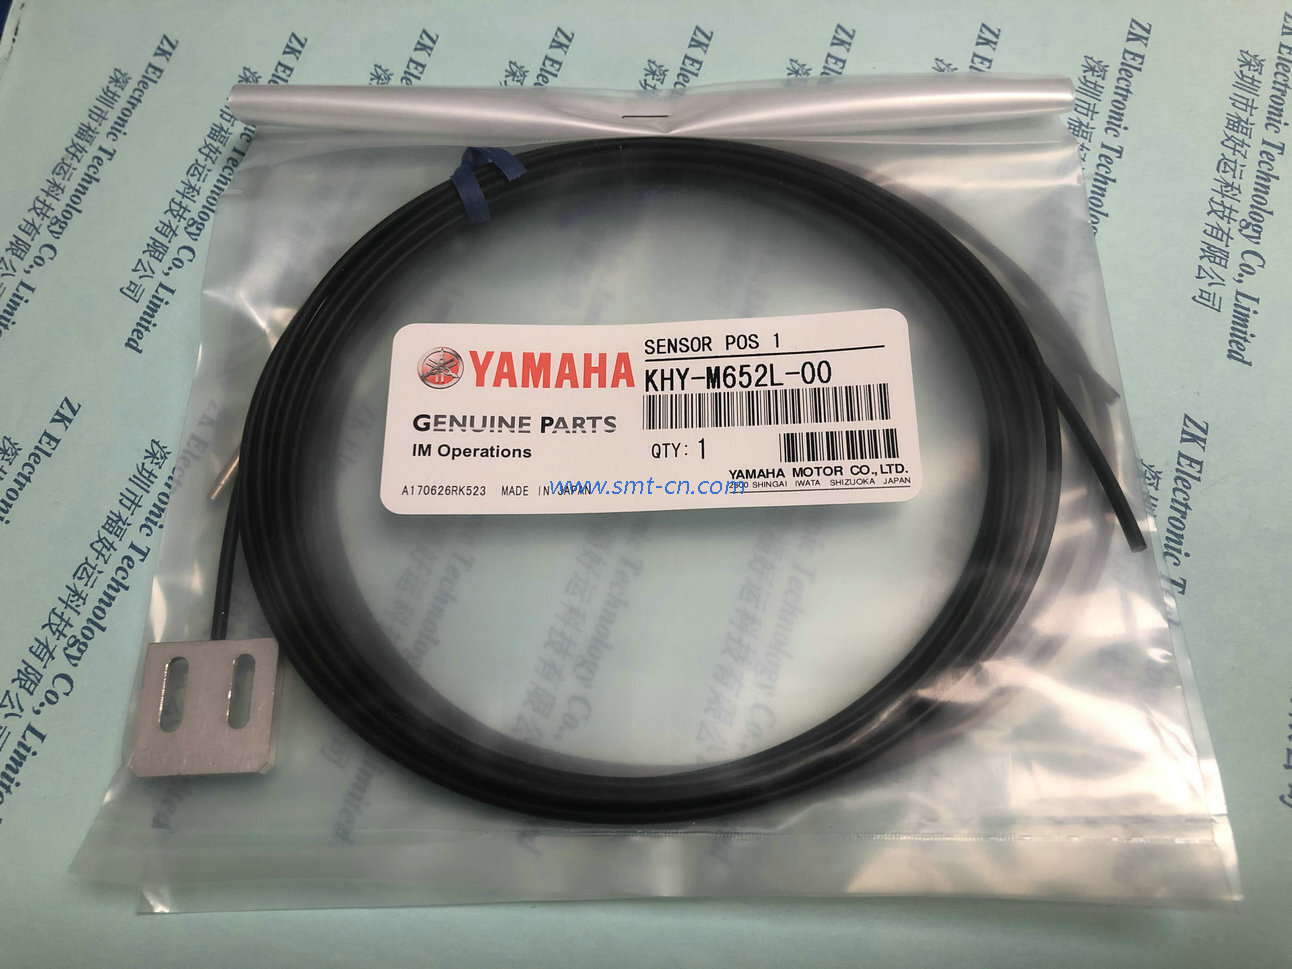  Yamaha KHY-M652L-00 Sensor, POS.1